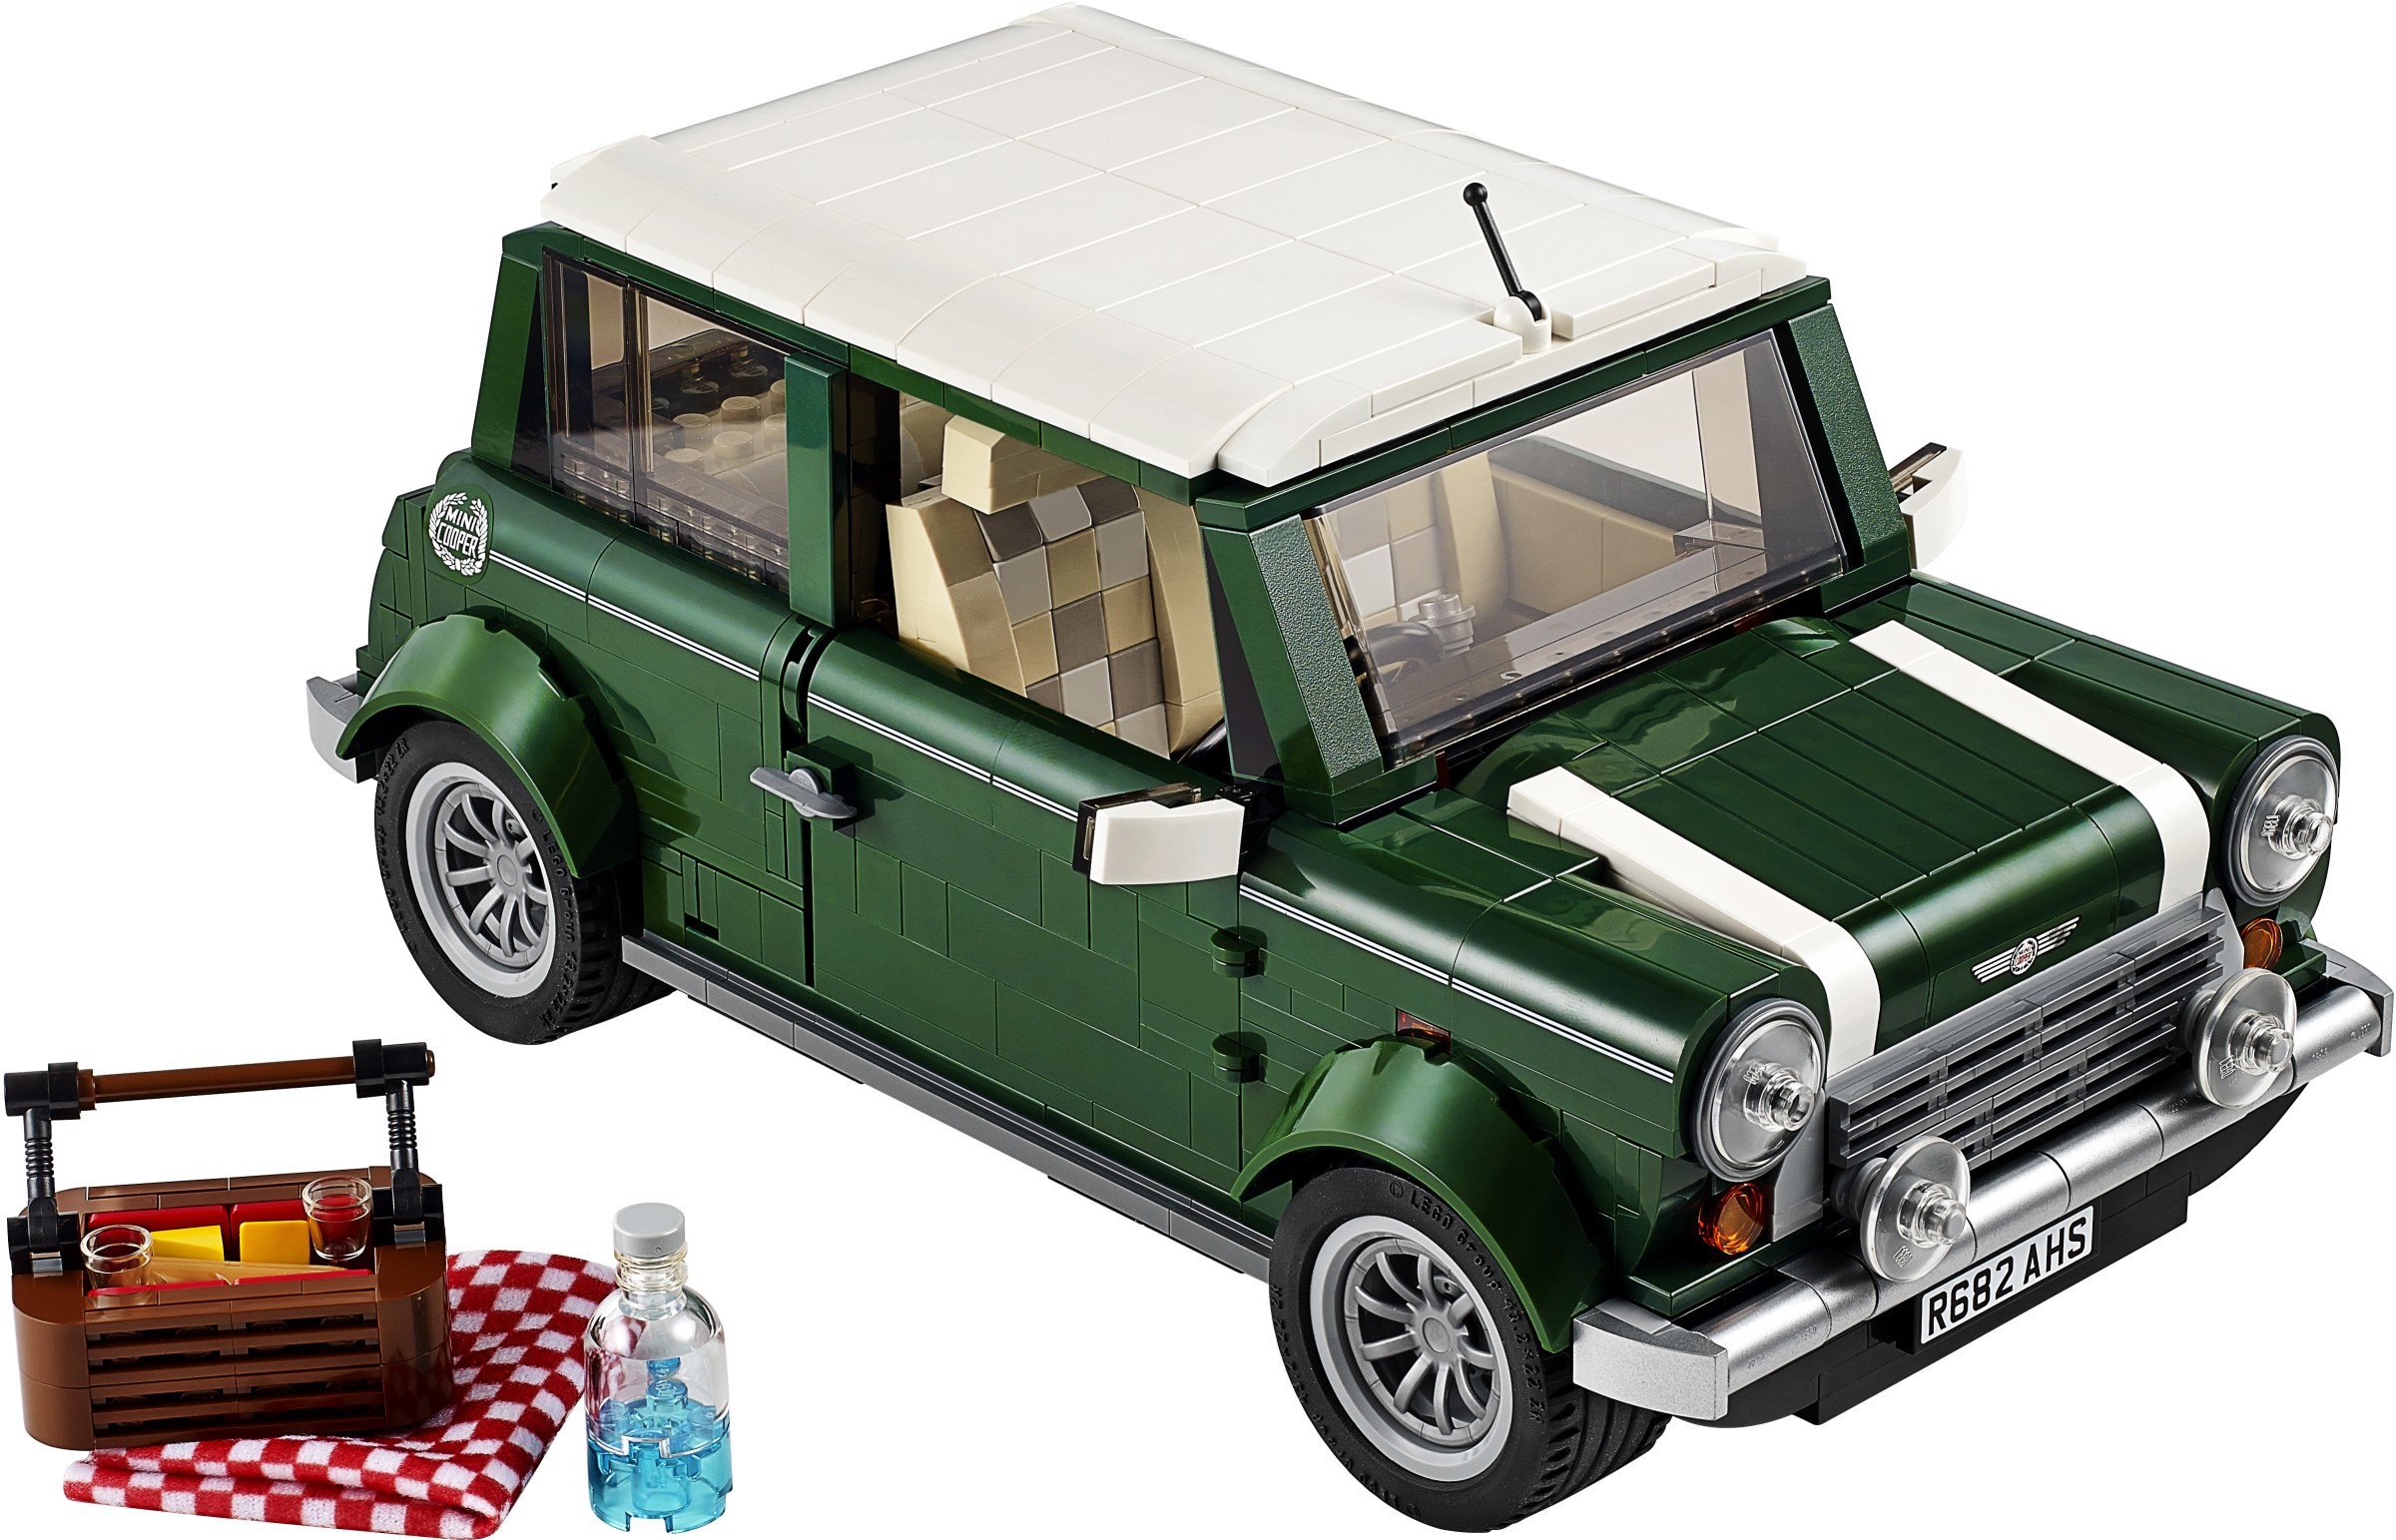 LEGO Creator Expert Vehicles | Brickset